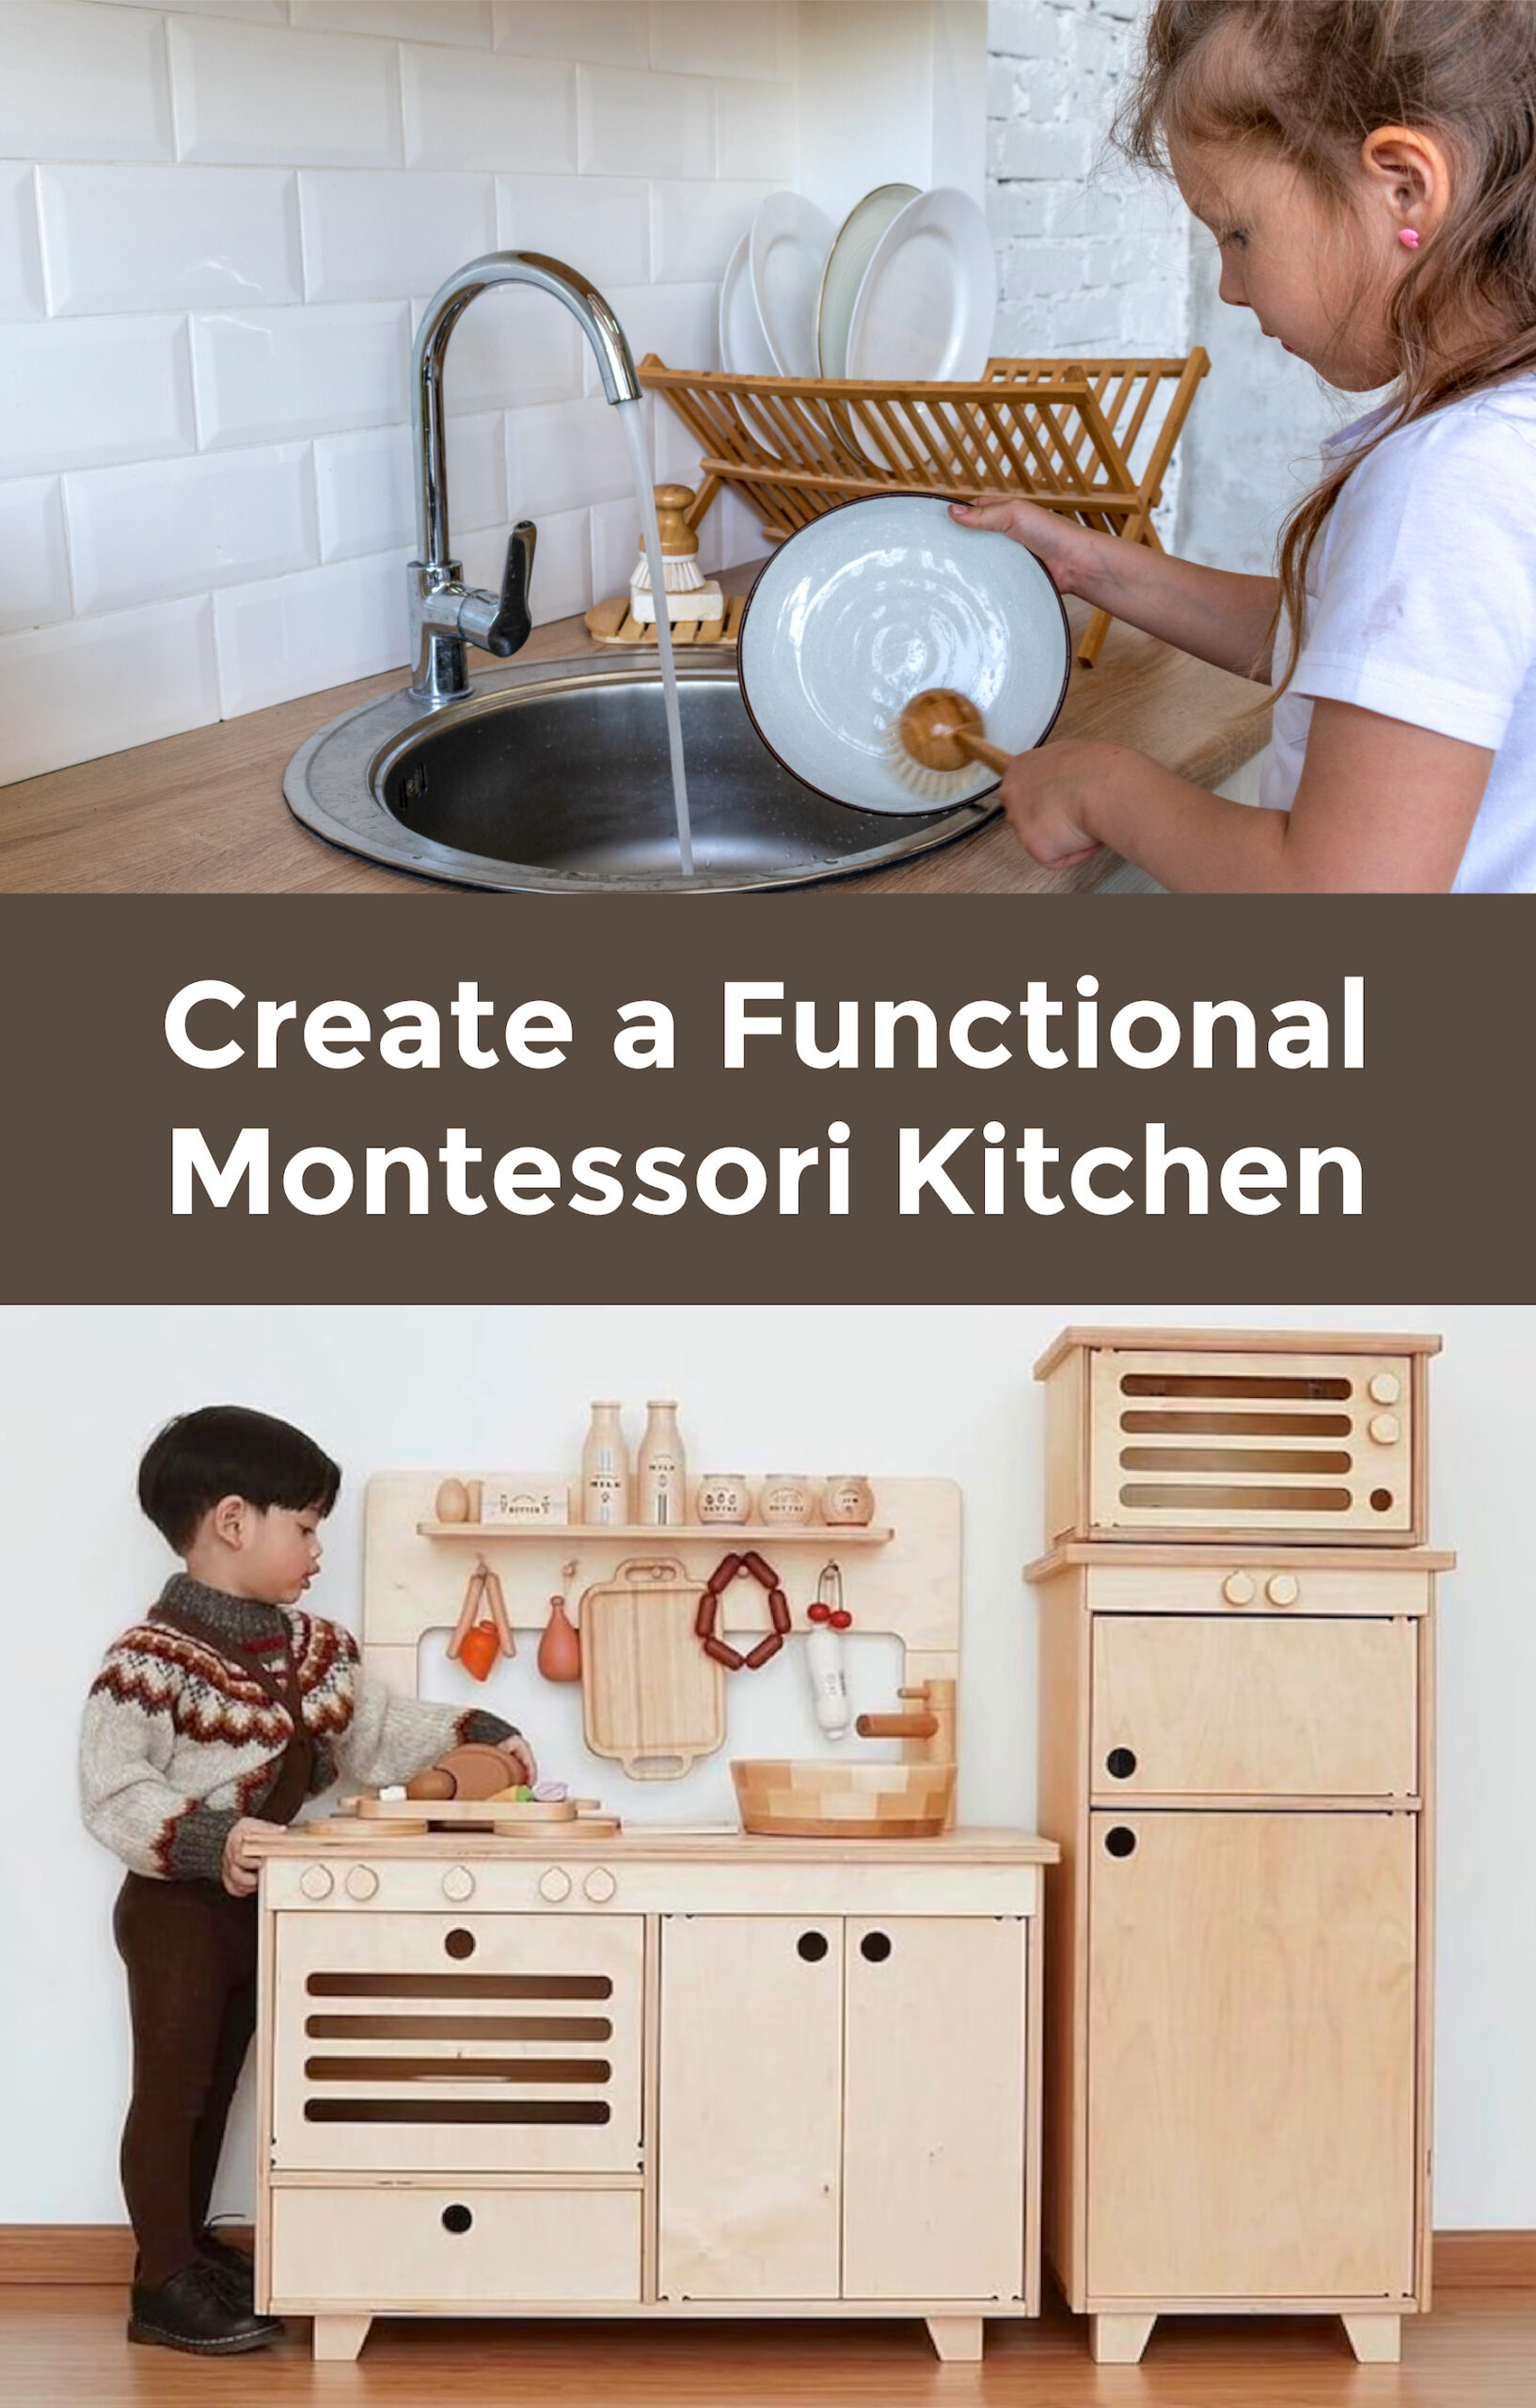 Our Montessori Home / Toddler Kitchen Tour - how we montessori